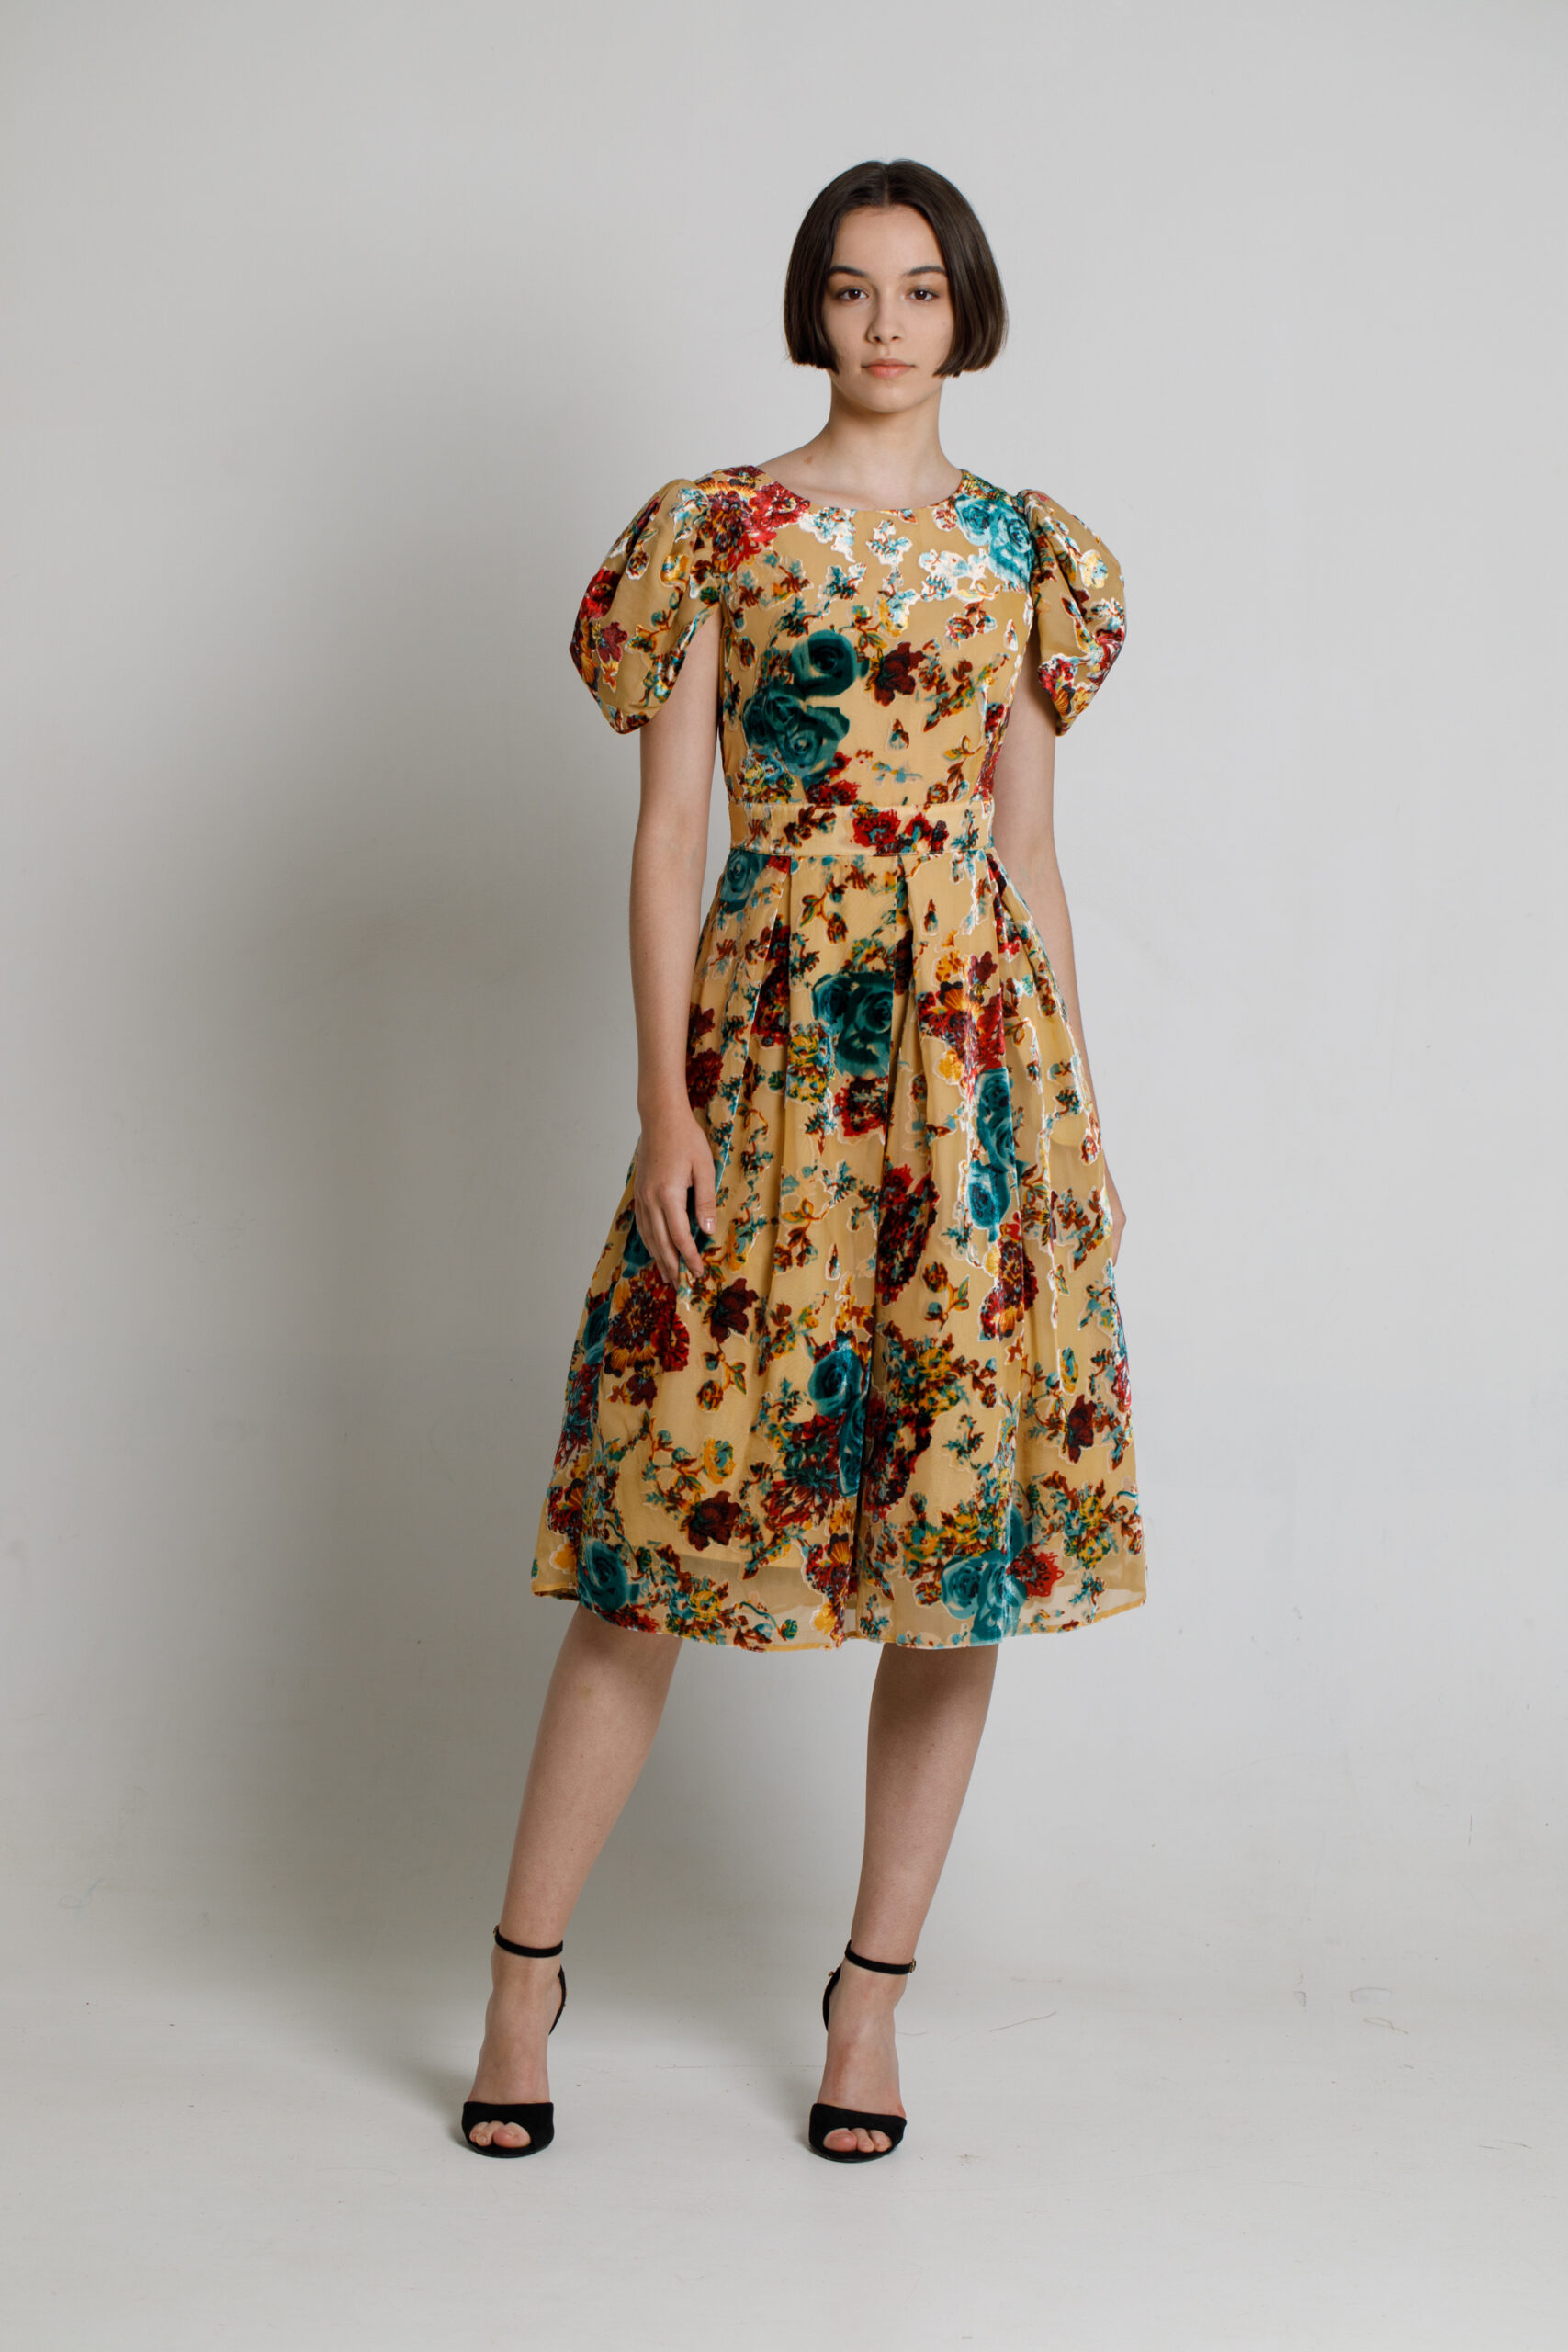 MING elegant velvet dress. Natural fabrics, original design, handmade embroidery